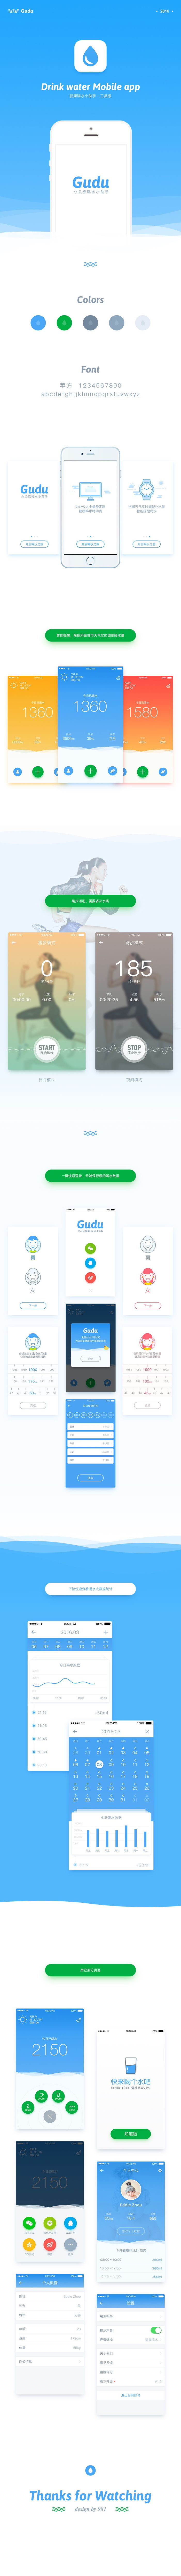 Gudu健康喝水小助手手机APP工具版界面UI设计